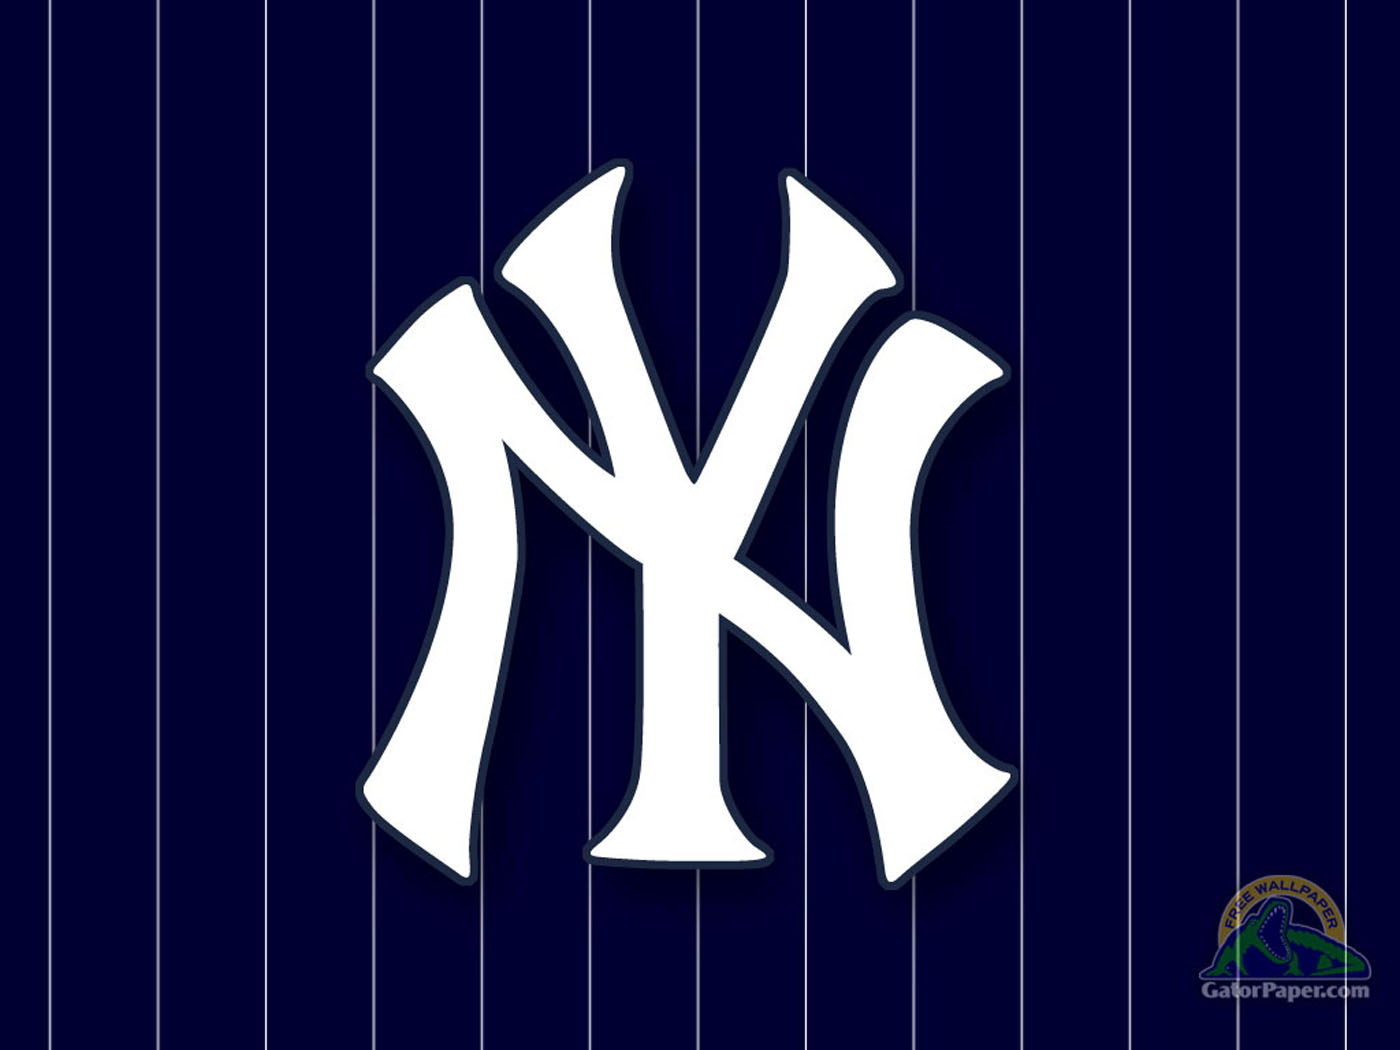 New York Yankees Pinstripes Reversed Gatorpaper Sports